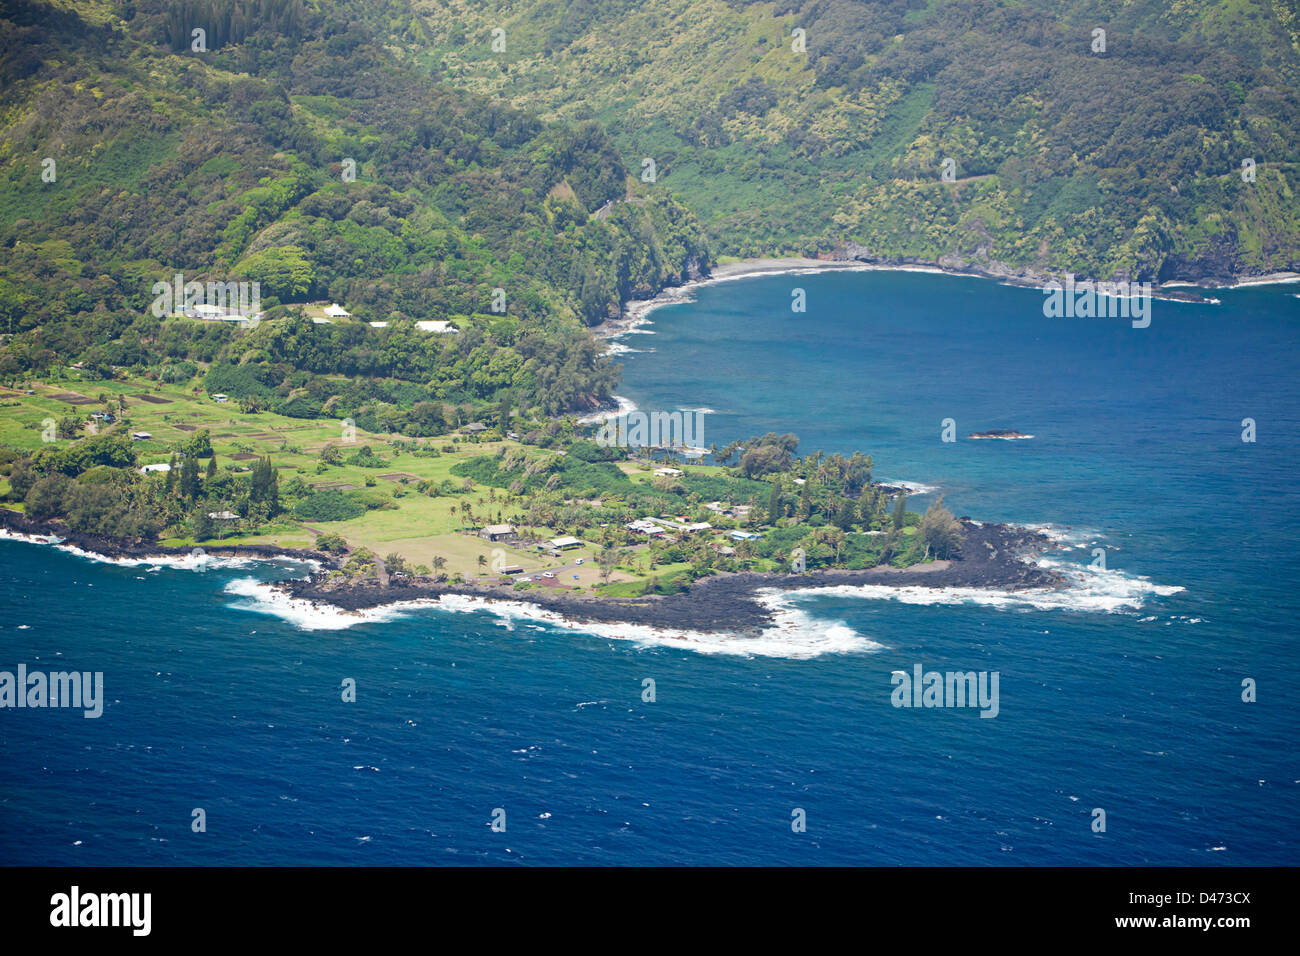 Eine Luftaufnahme der Halbinsel Keanae entlang Mauis berühmte Straße nach Hana, Maui, Hawaii, USA. Stockfoto